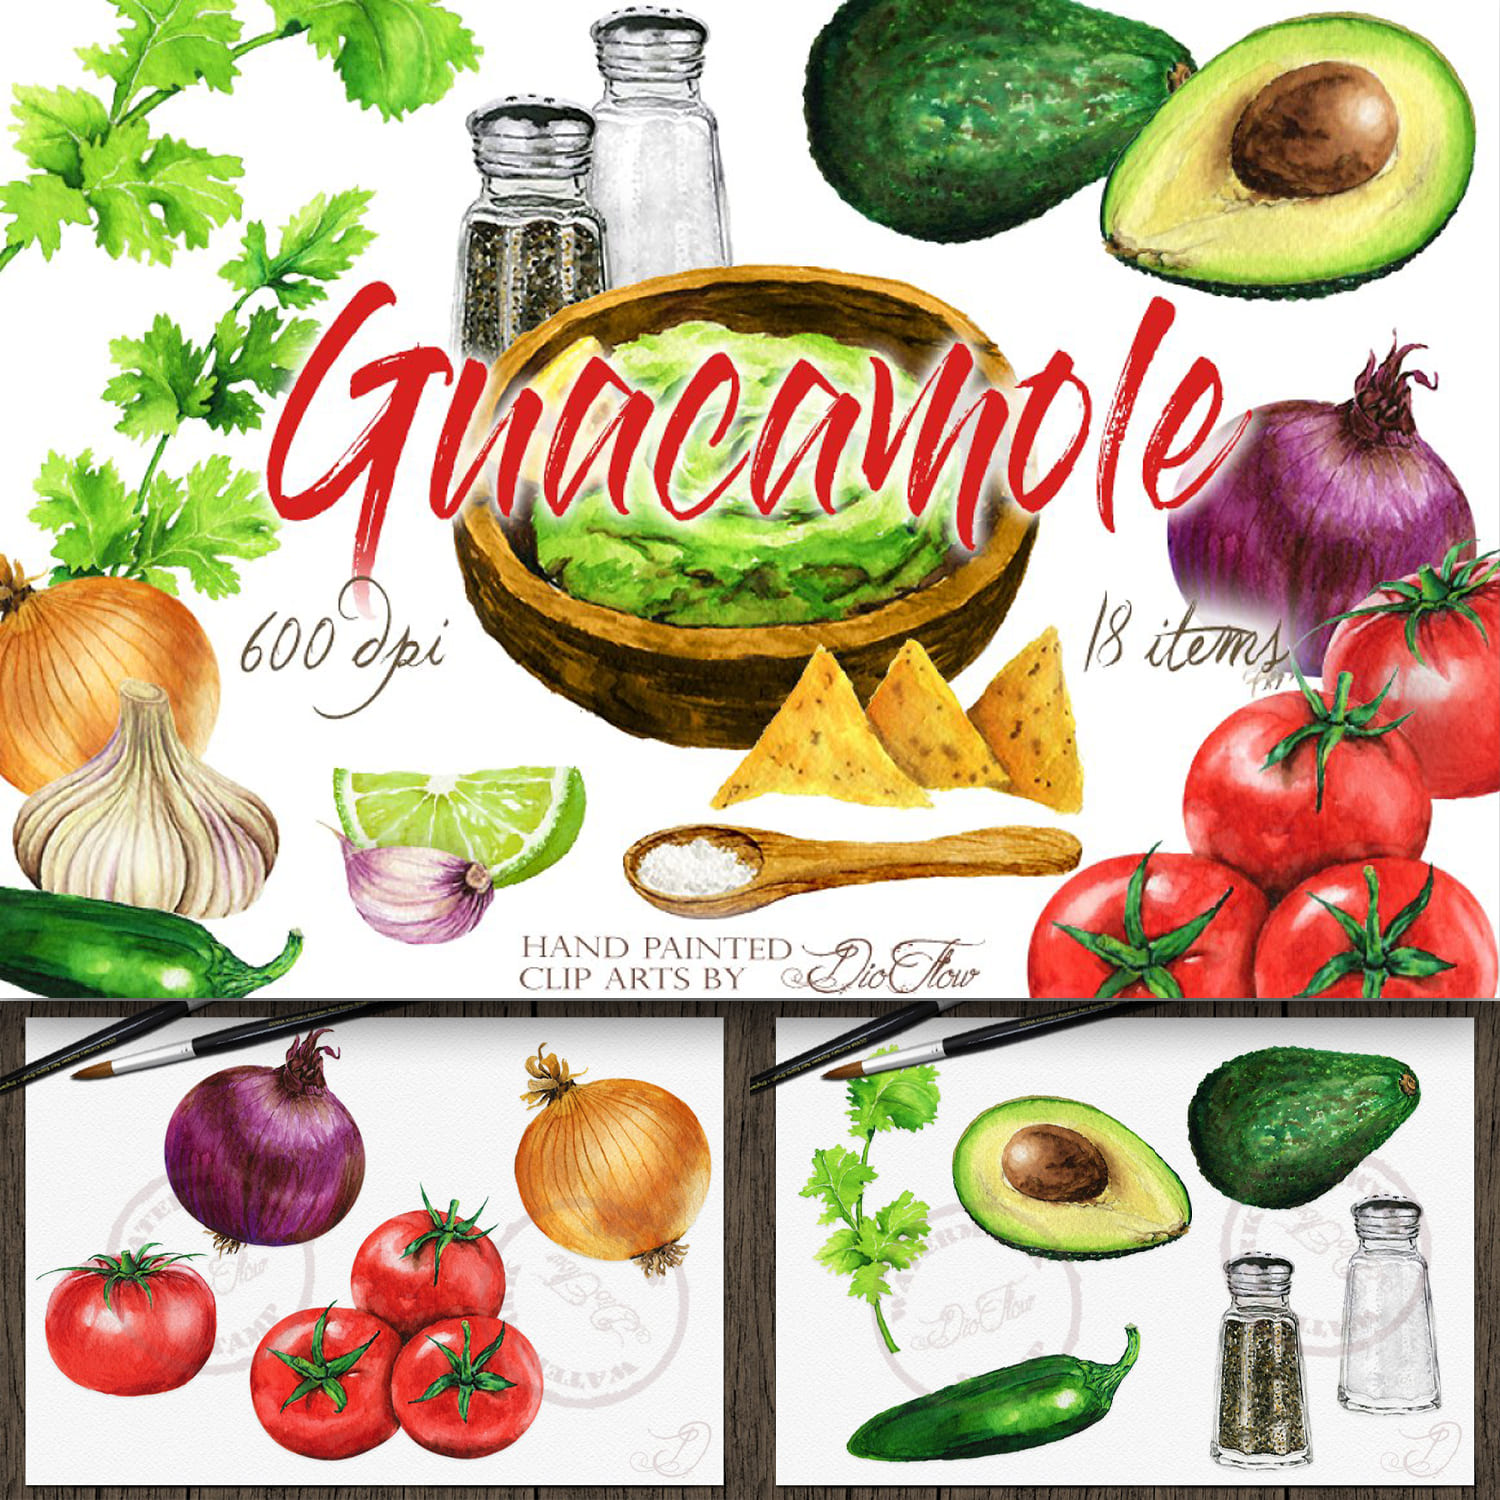 Guacamole Watercolor Clip Art cover.